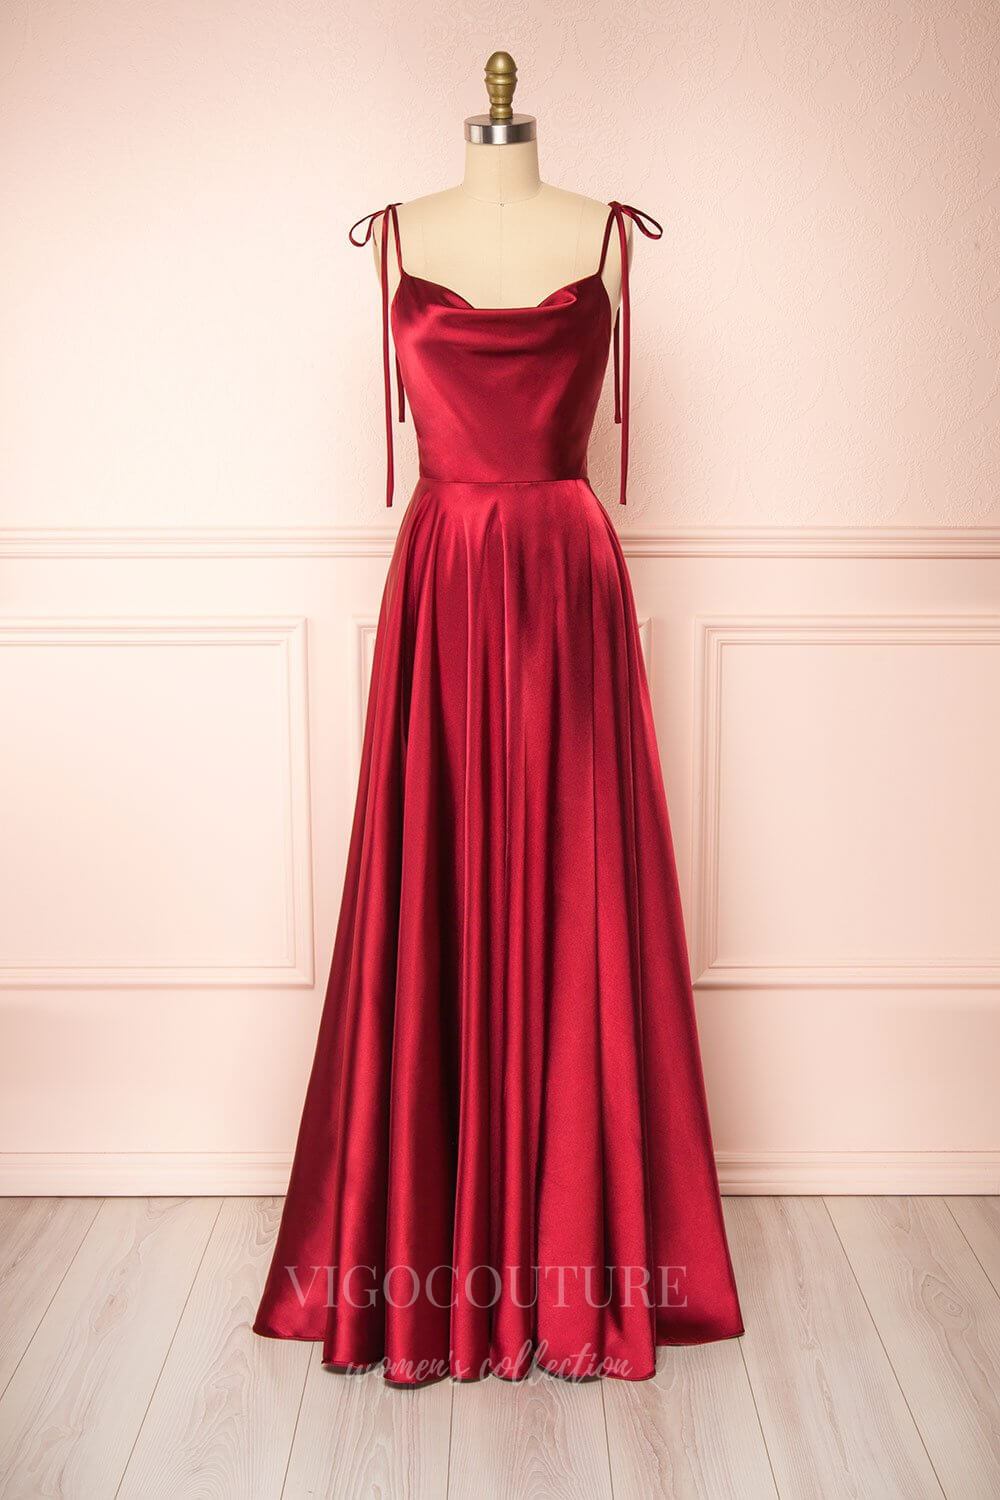 vigocouture-Burgundy Spaghetti Strap Prom Dress 20576-Prom Dresses-vigocouture-Burgundy-US2-